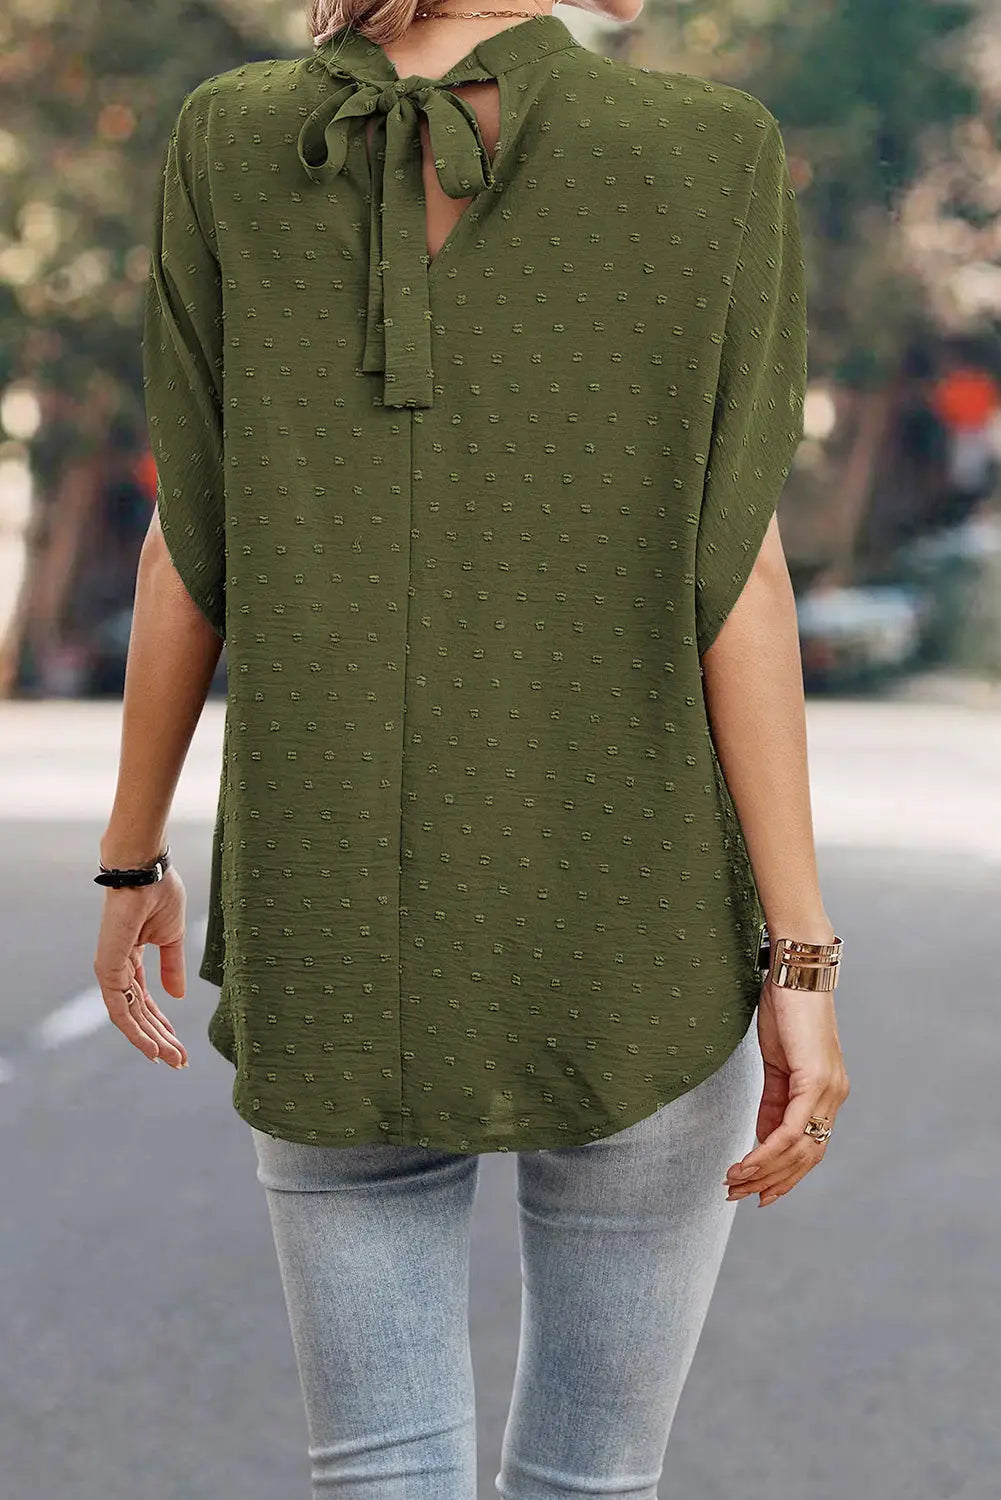 Swiss dot batwing sleeve blouse - tops/blouses & shirts